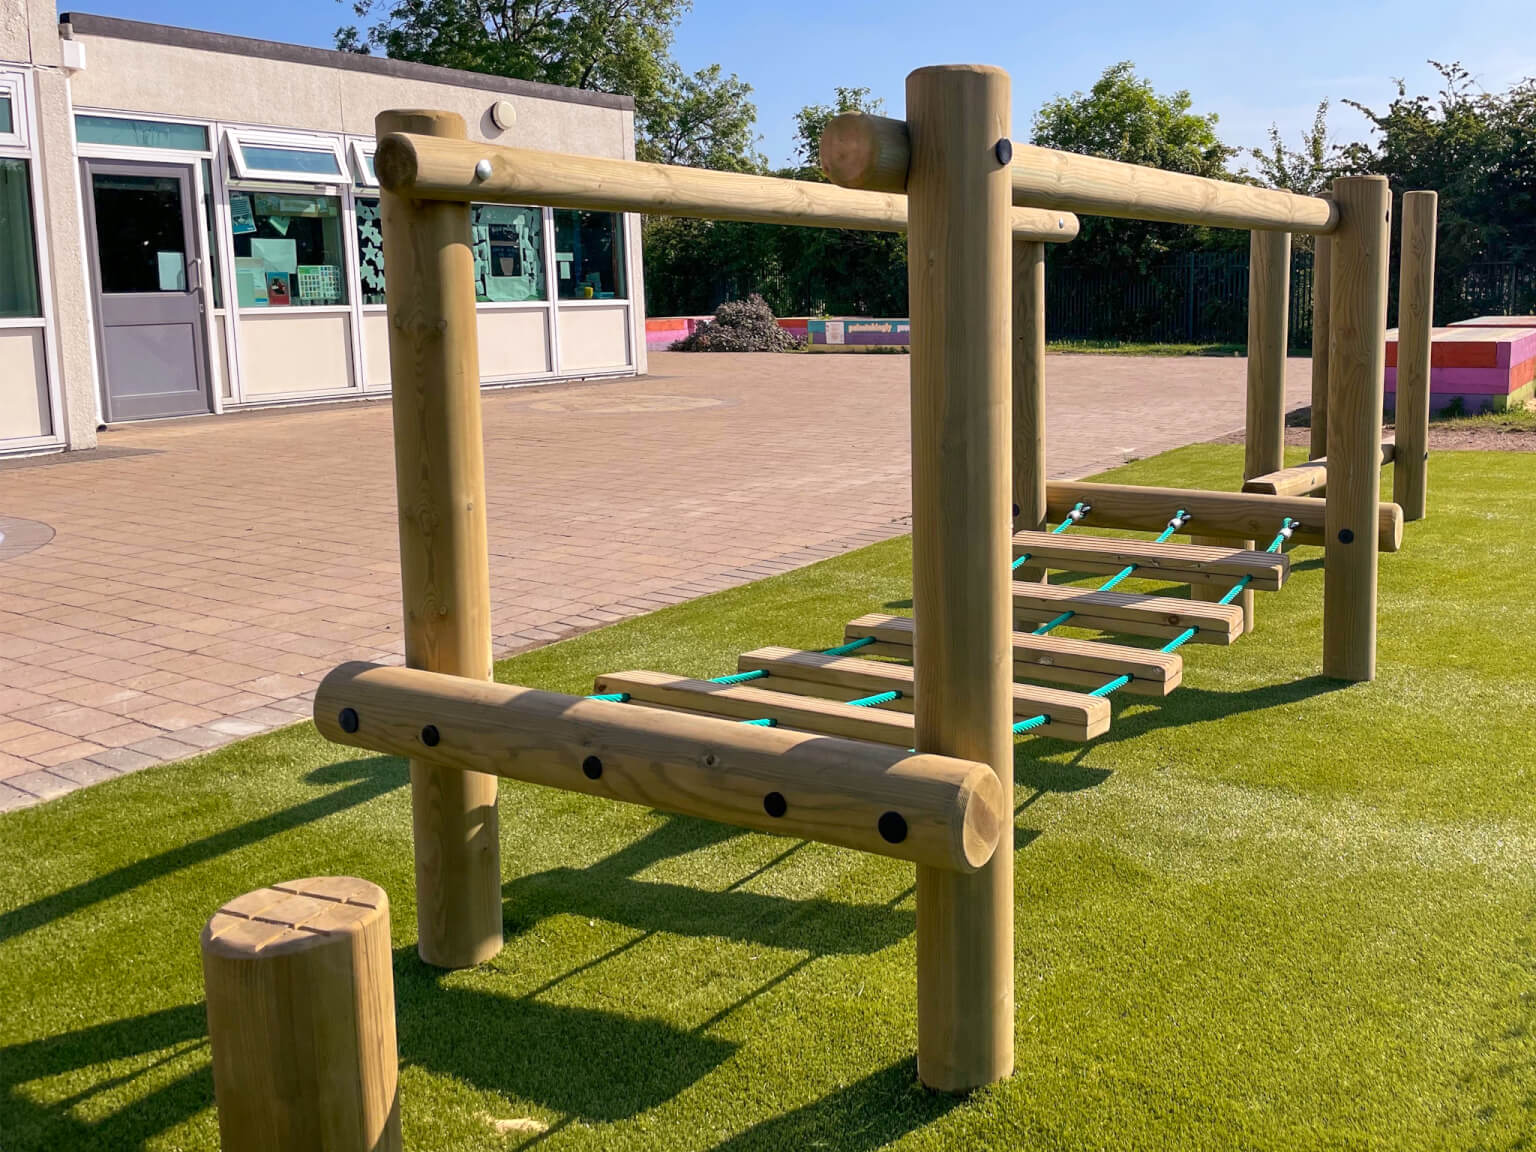 Mundtlig fordrejer buste Trim Trails - The School Playground Company